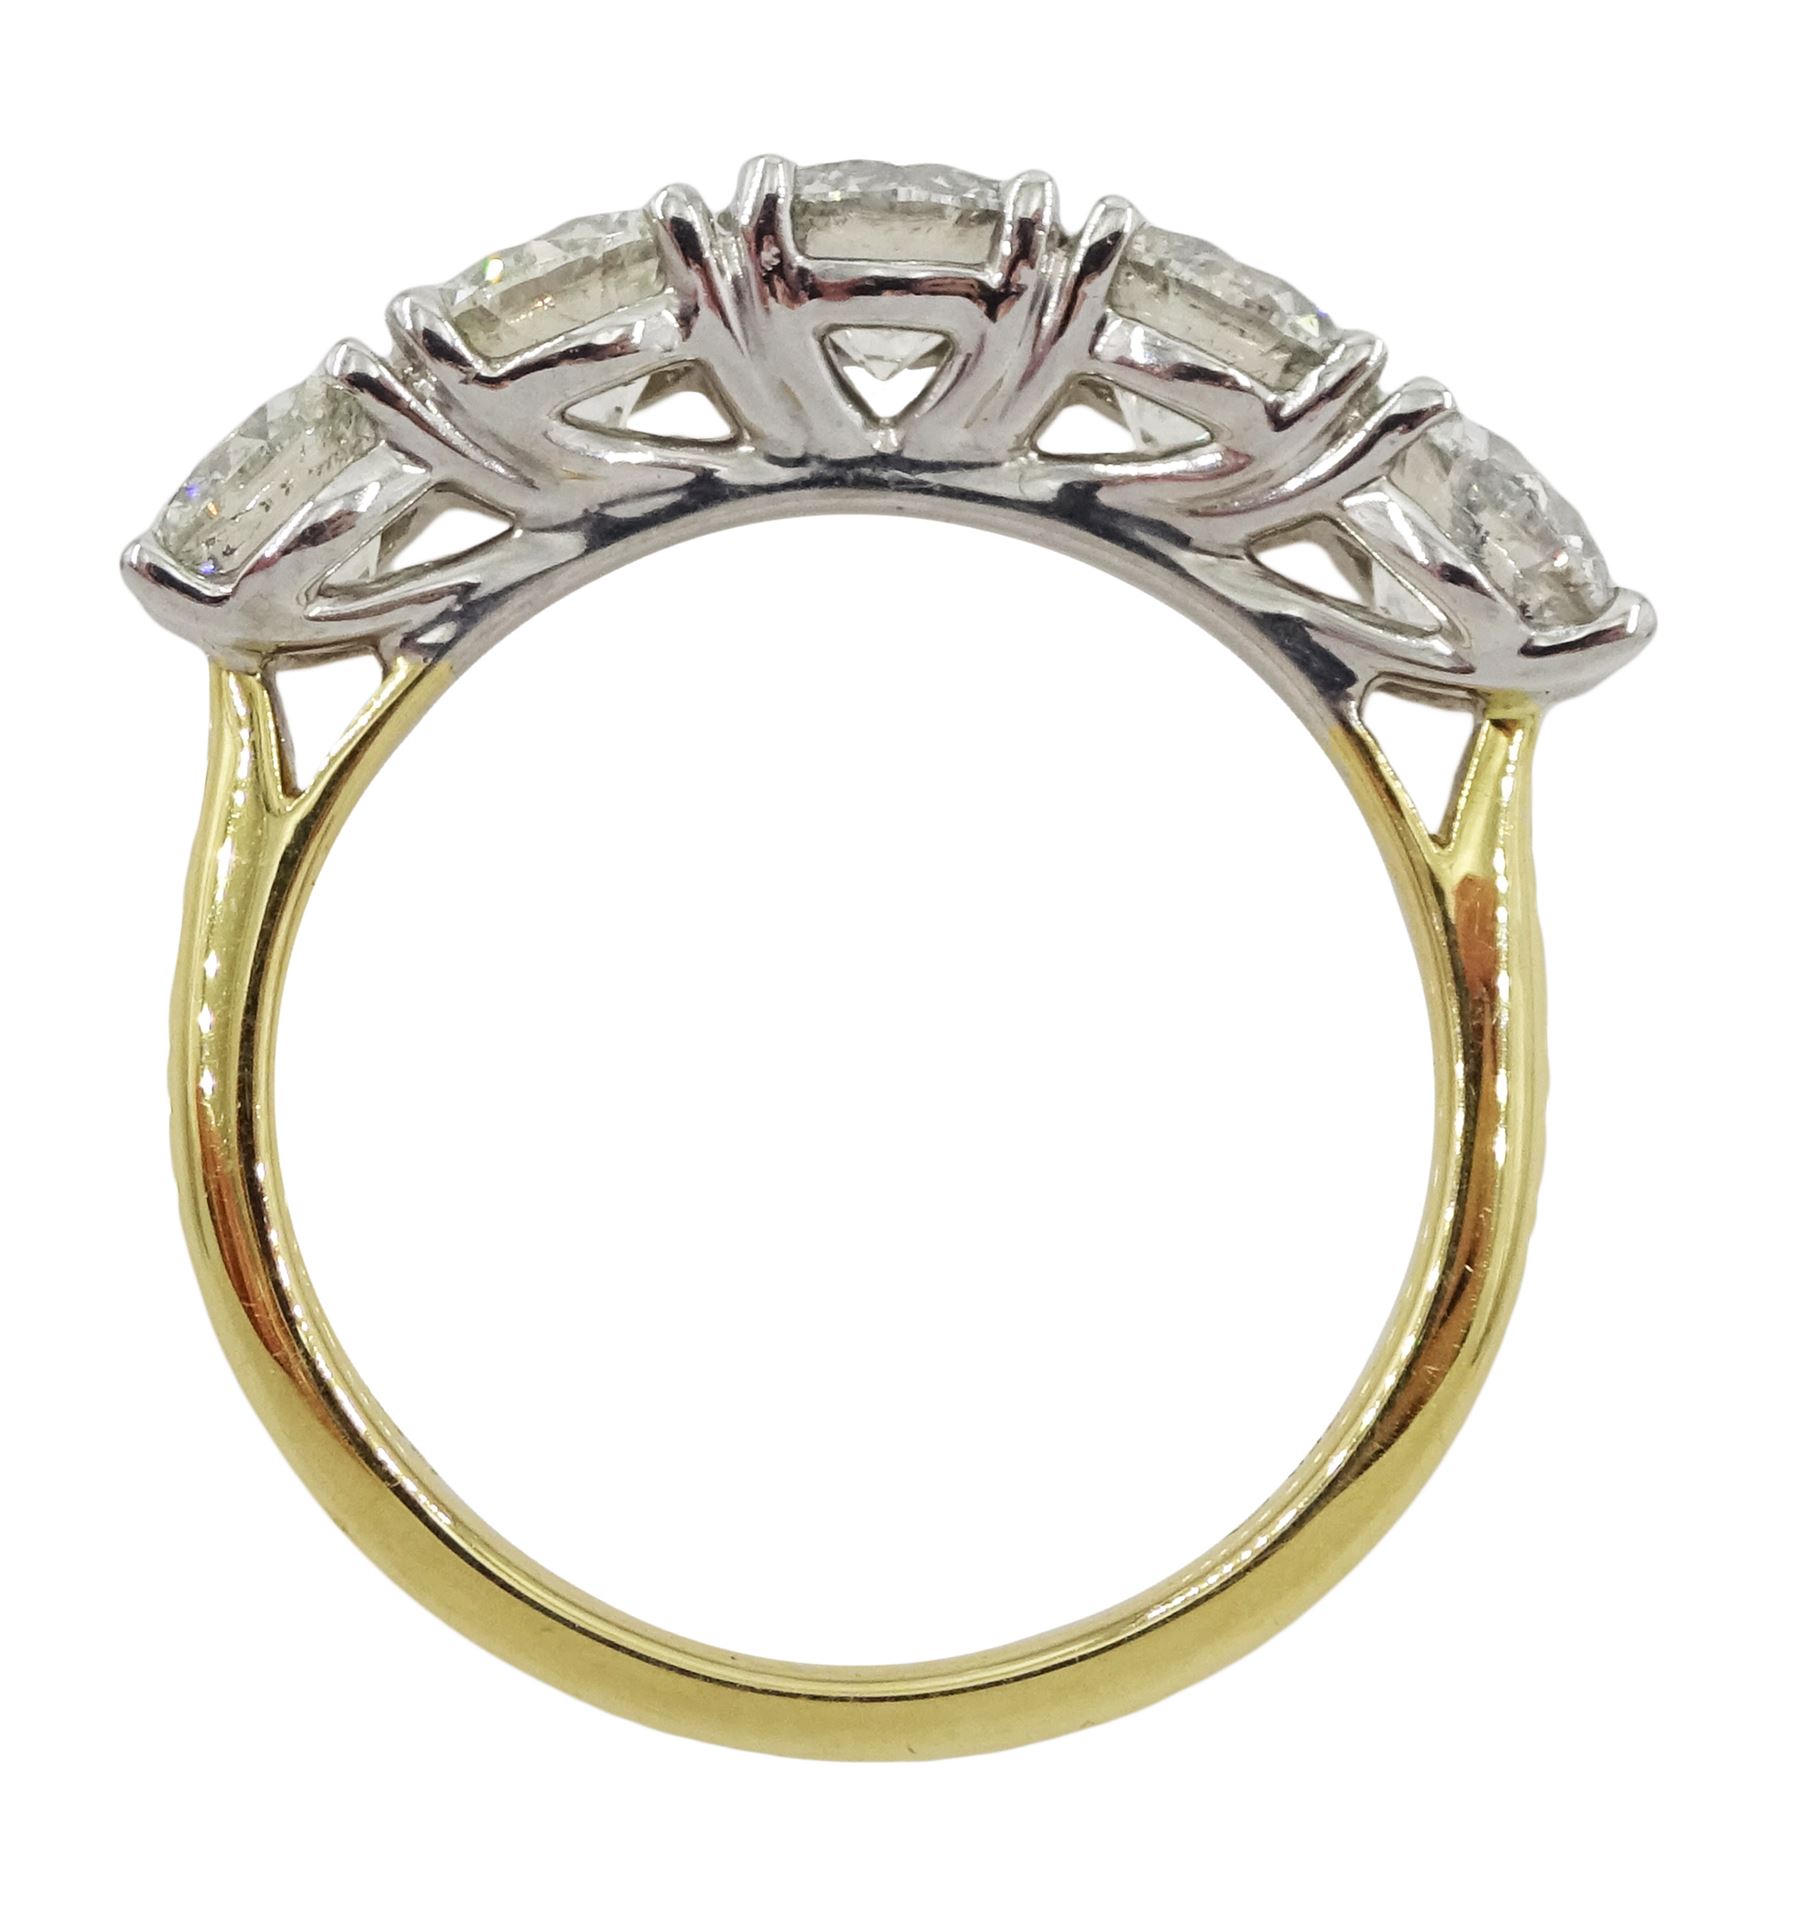 18ct gold five stone round brilliant cut diamond ring - Image 3 of 3